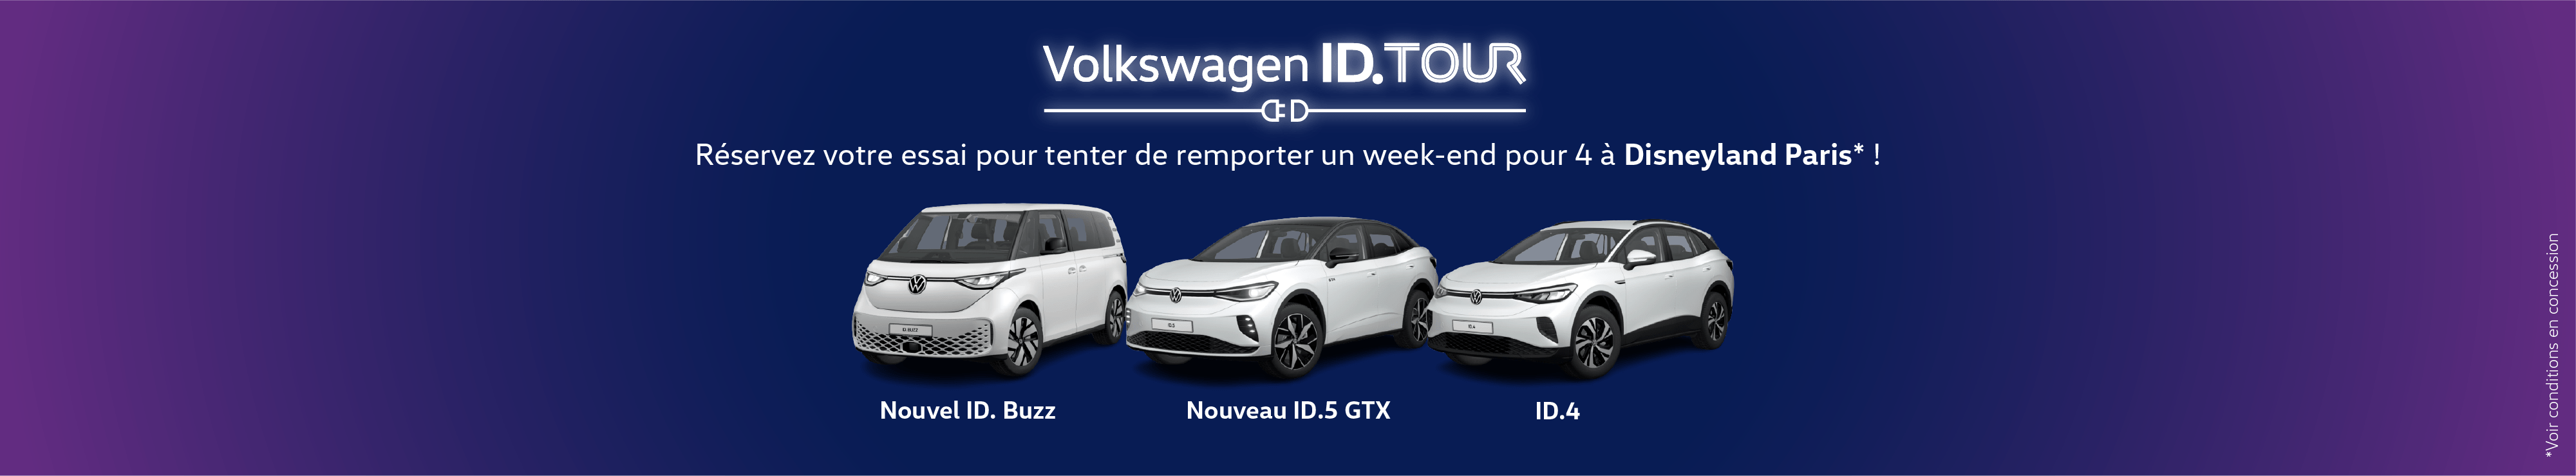 Volkswagen Villeneuve-d'Ascq AUTO-EXPO Volkswagen ID.Tour